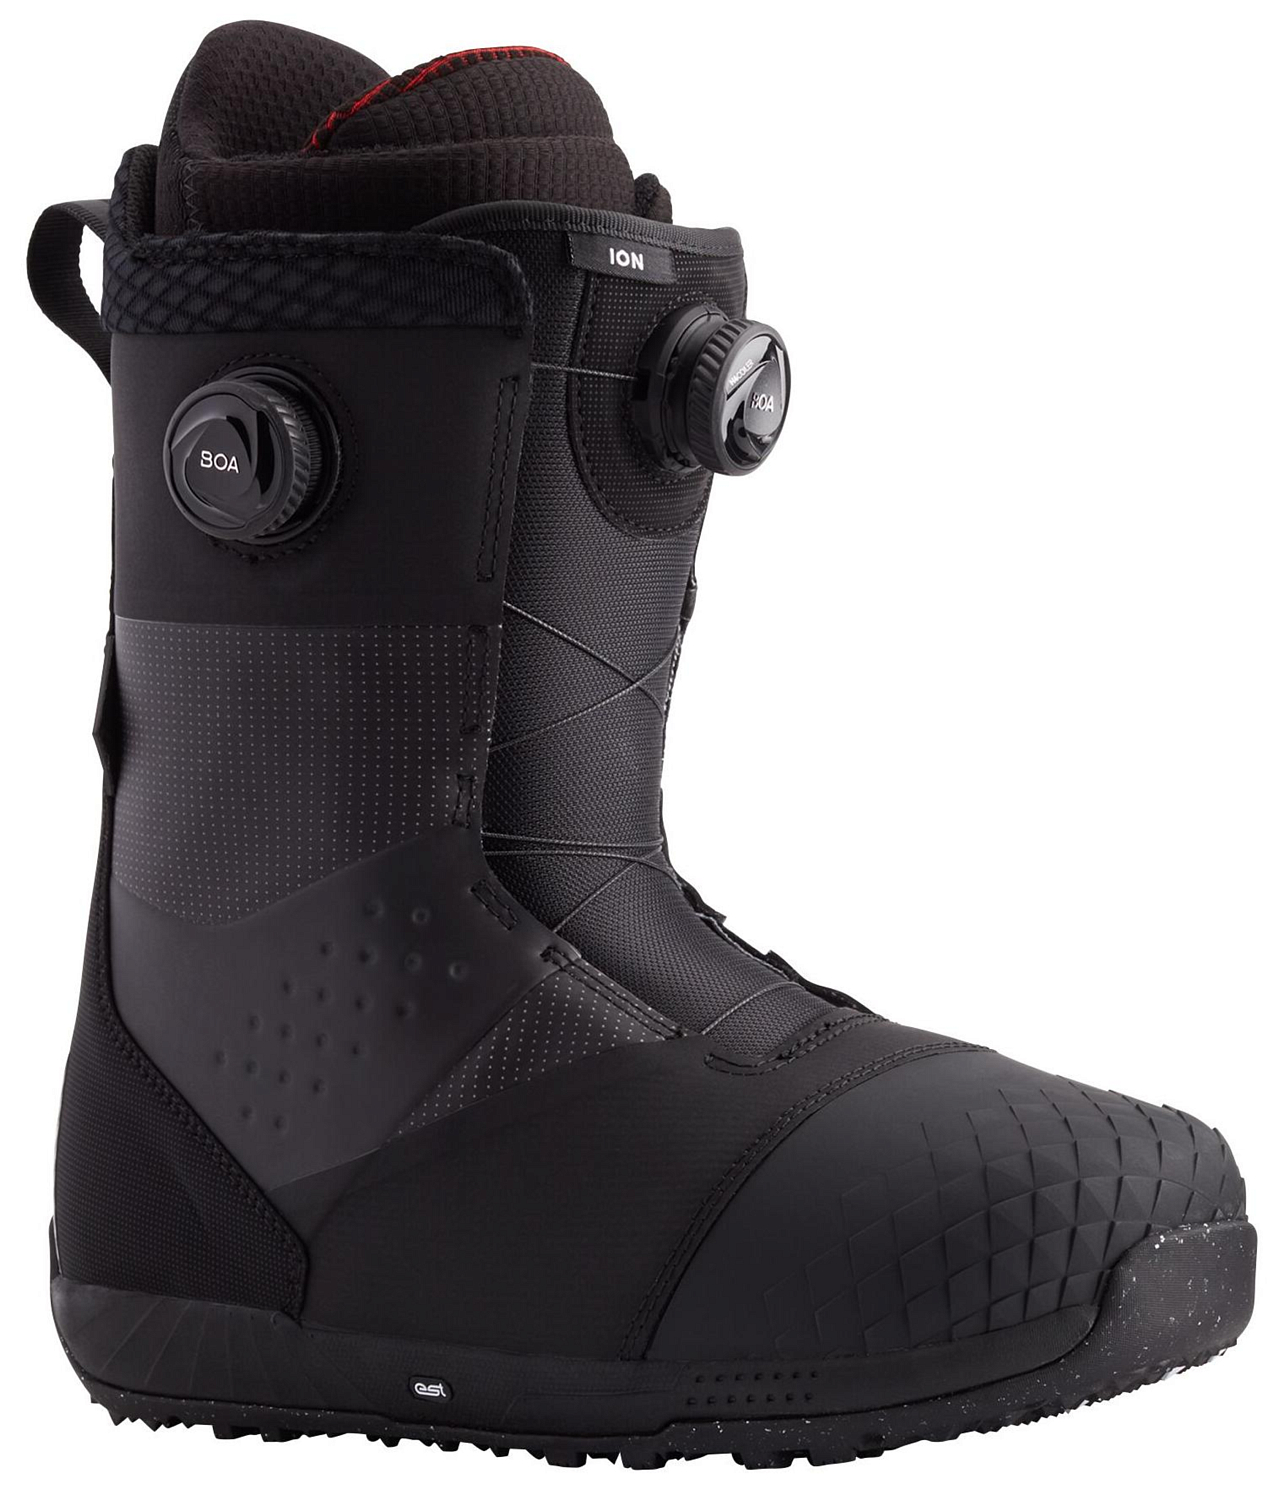 фото Ботинки для сноуборда burton ion boa 2021/2022, black, 25,5 см